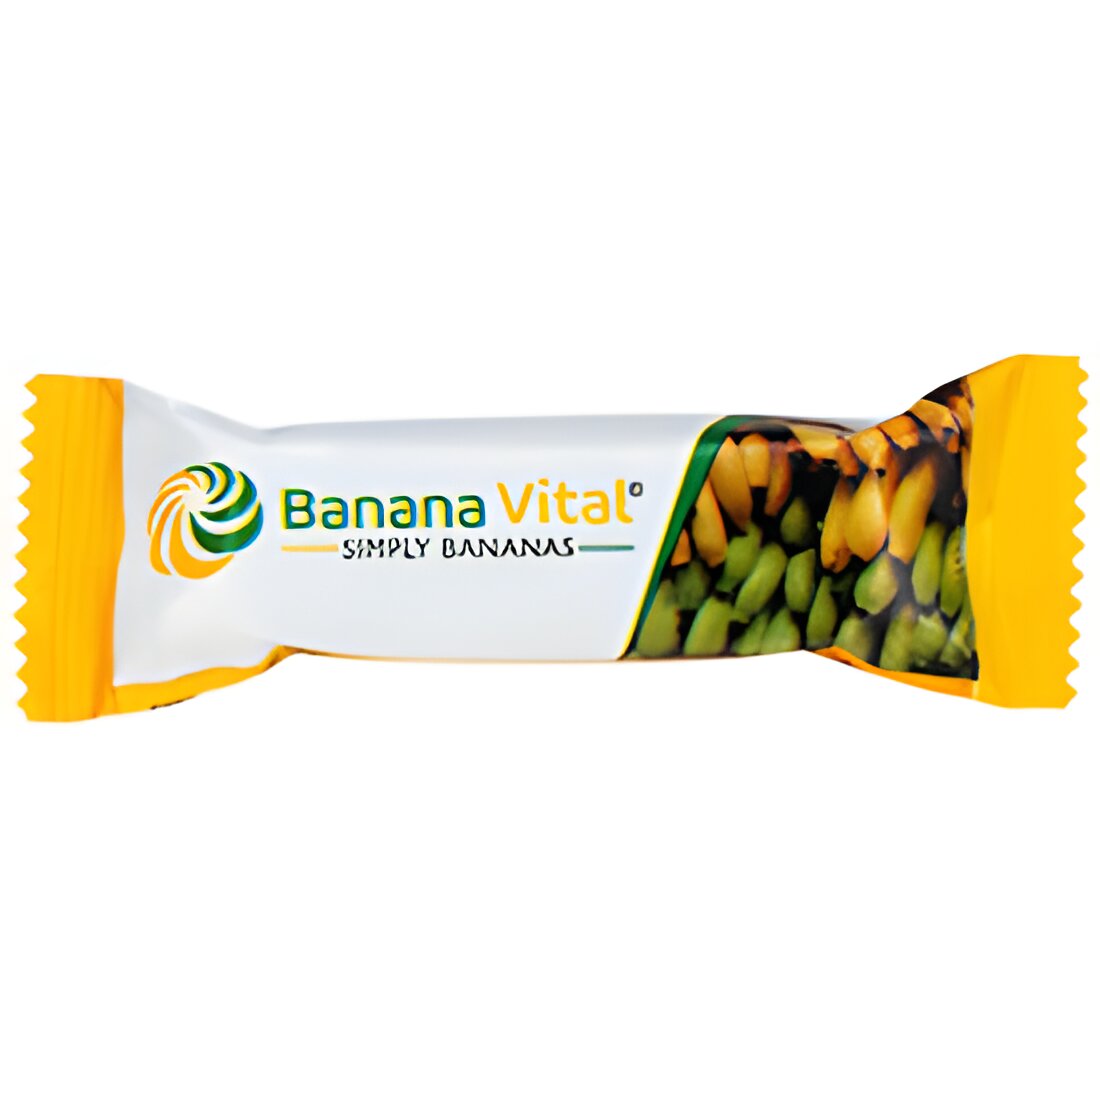 Free Simply Bananas Banana Vital Fruit Bar